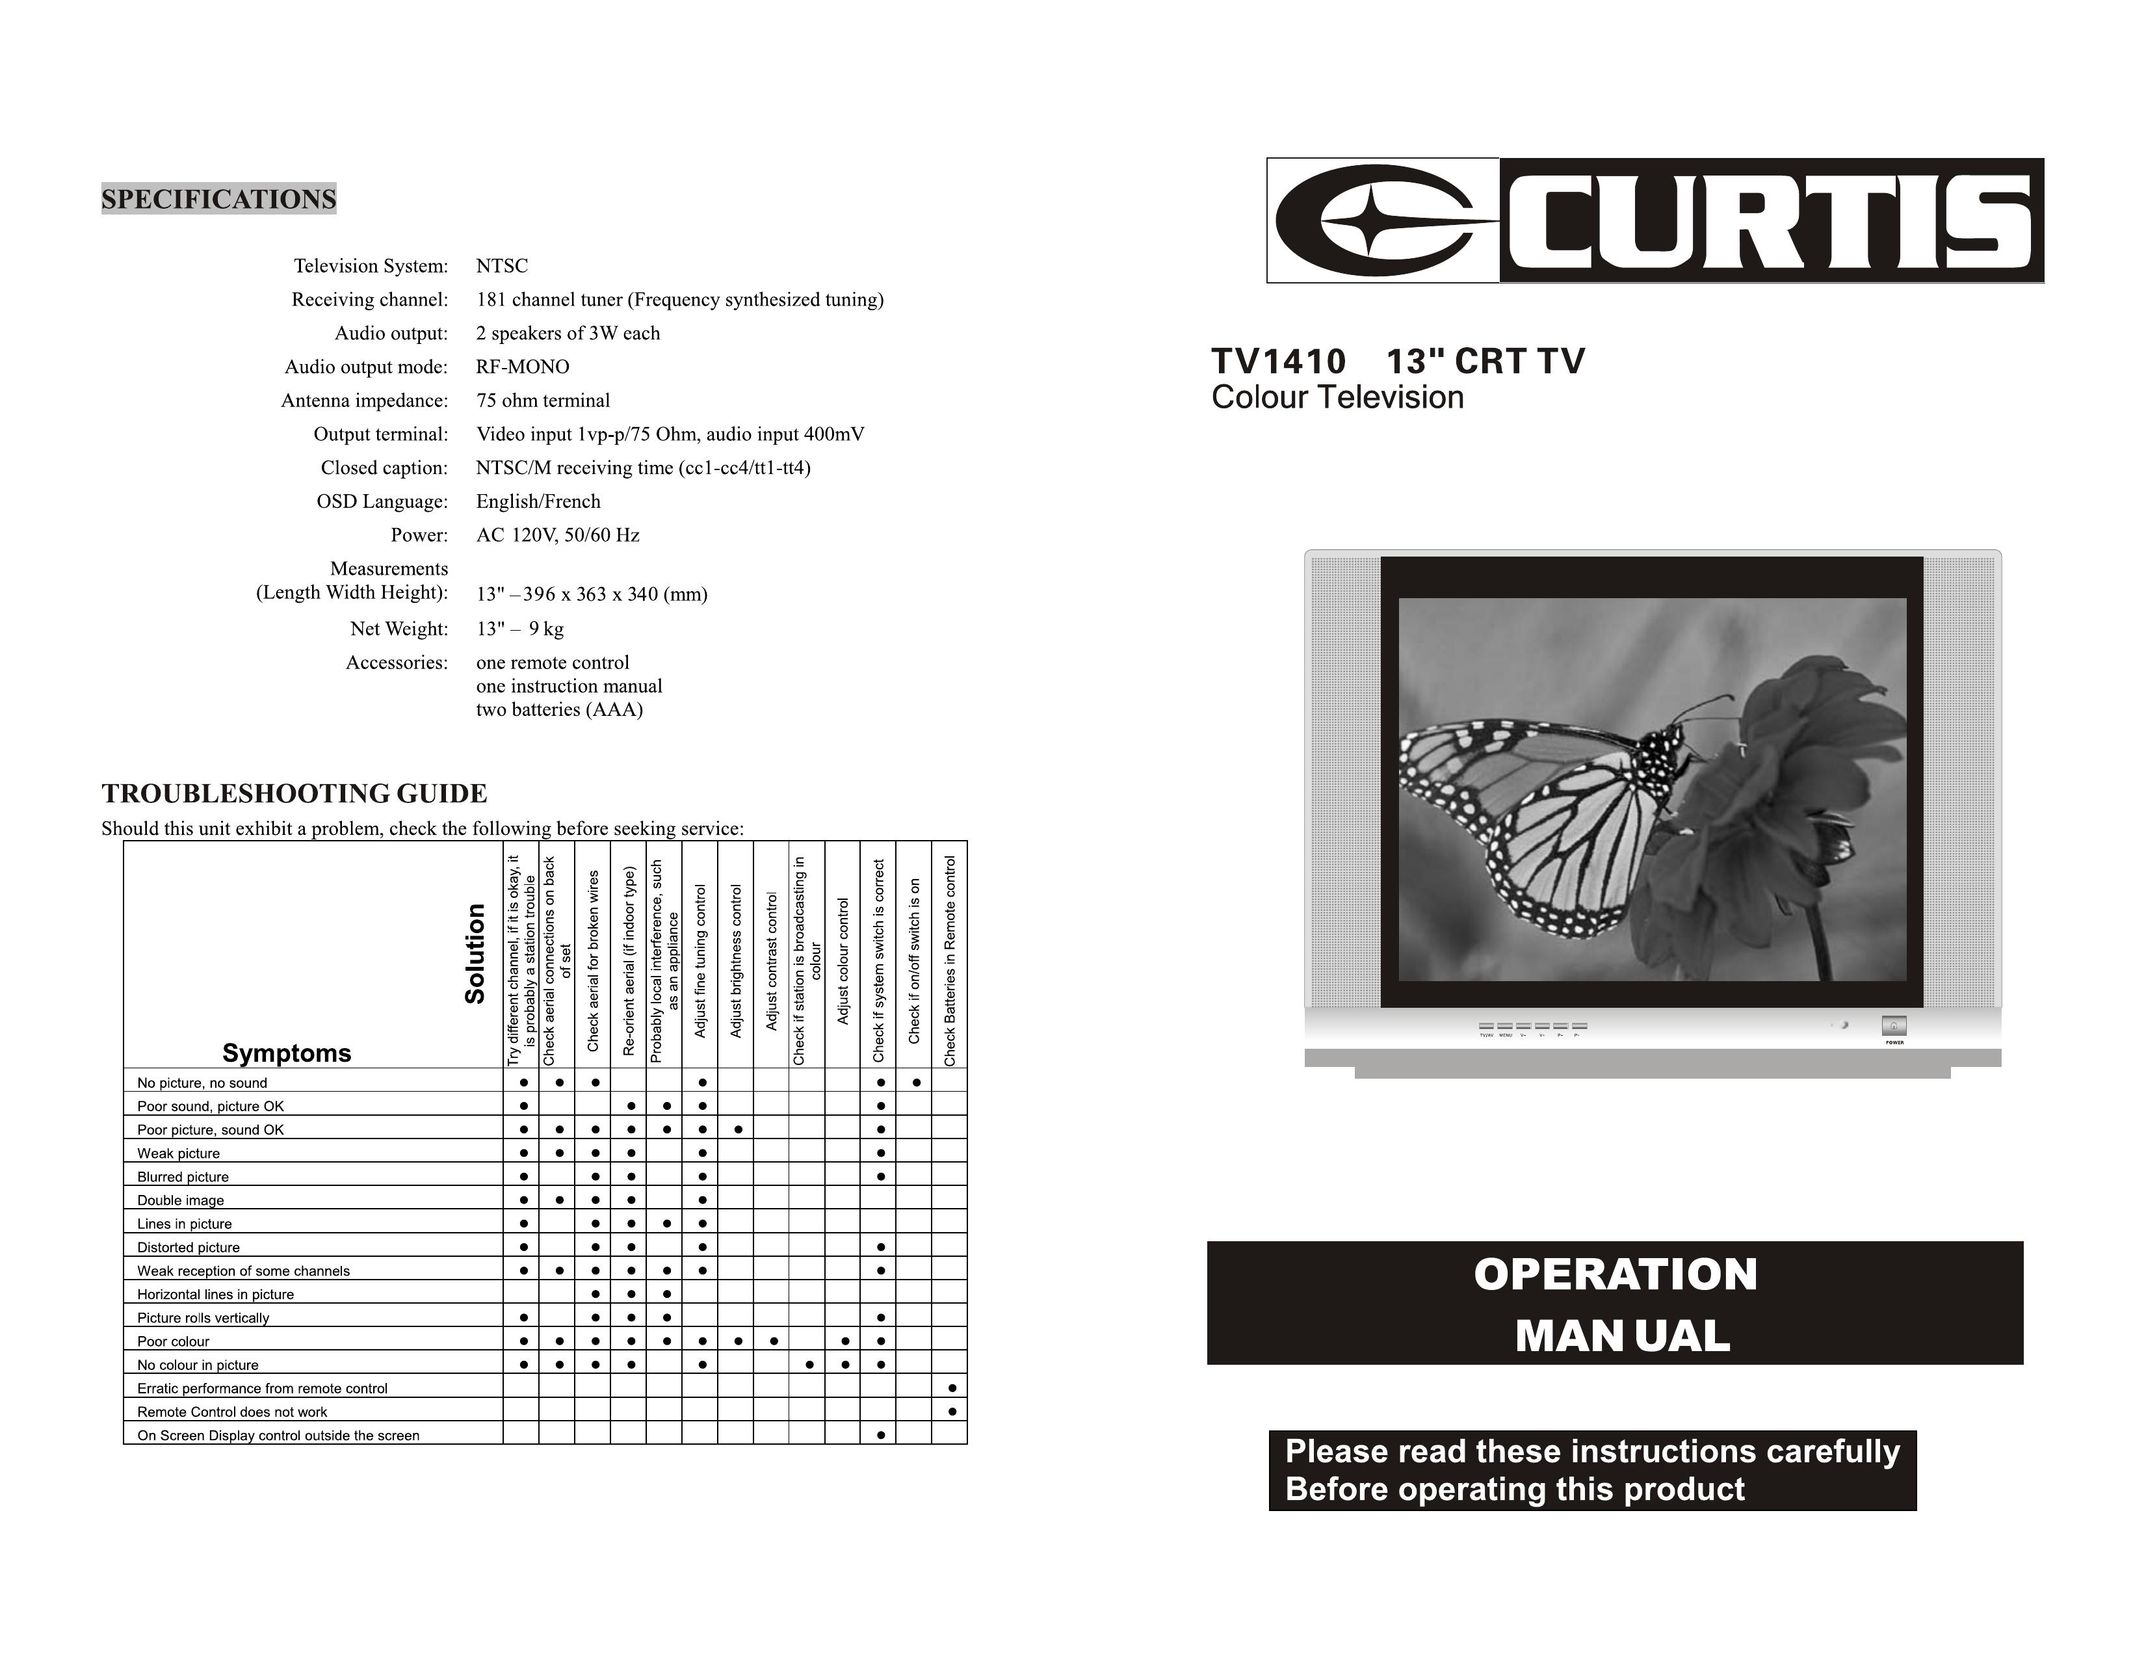 Curtis TV1410 CRT Television User Manual